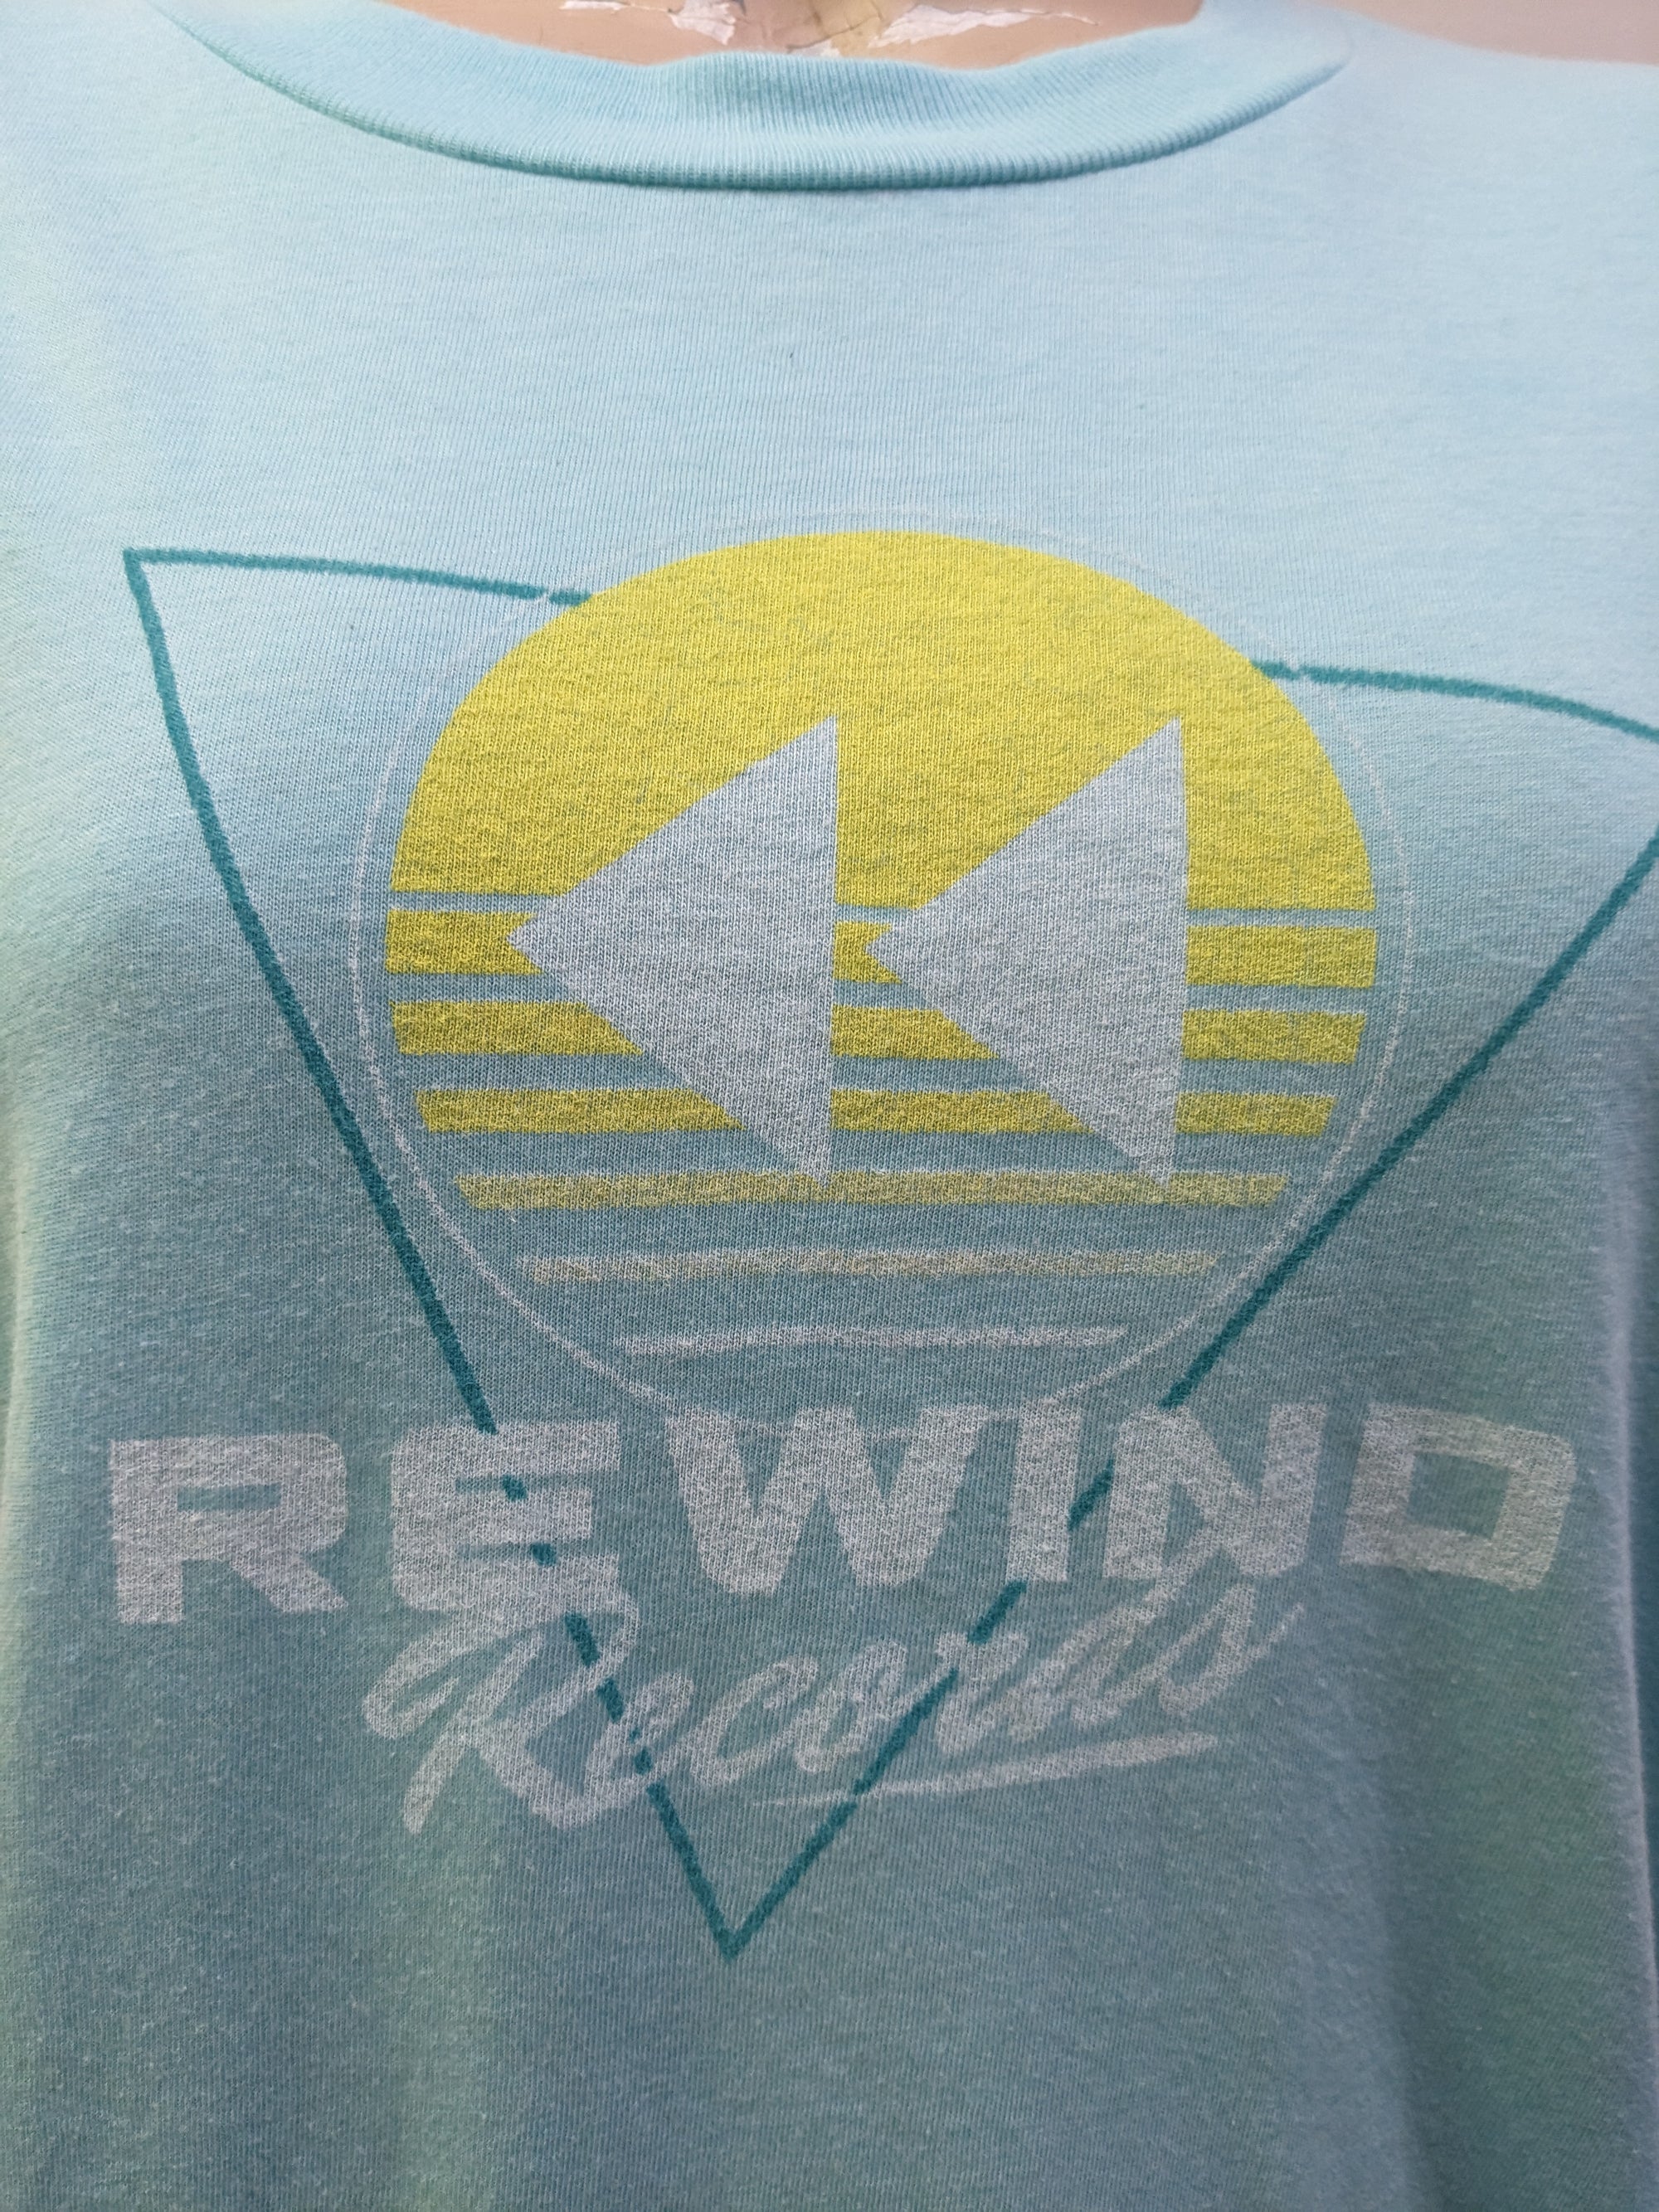 Rewind Records Crop - XL